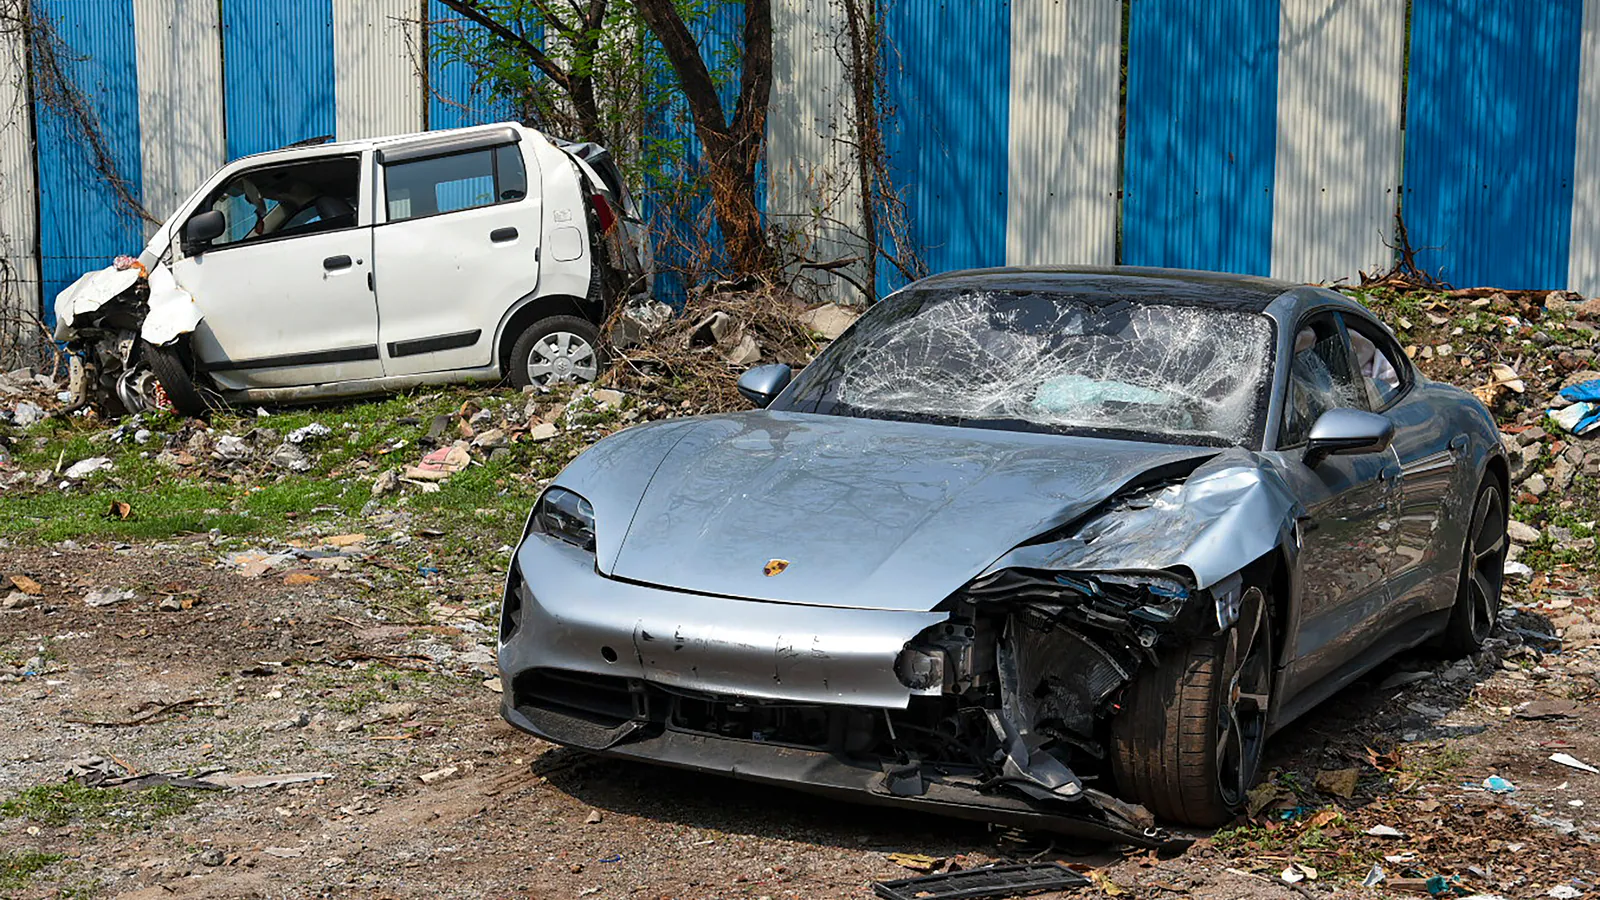 Porsche Crash: Pune Police Plan Supreme Court Appeal For Teen’s Release